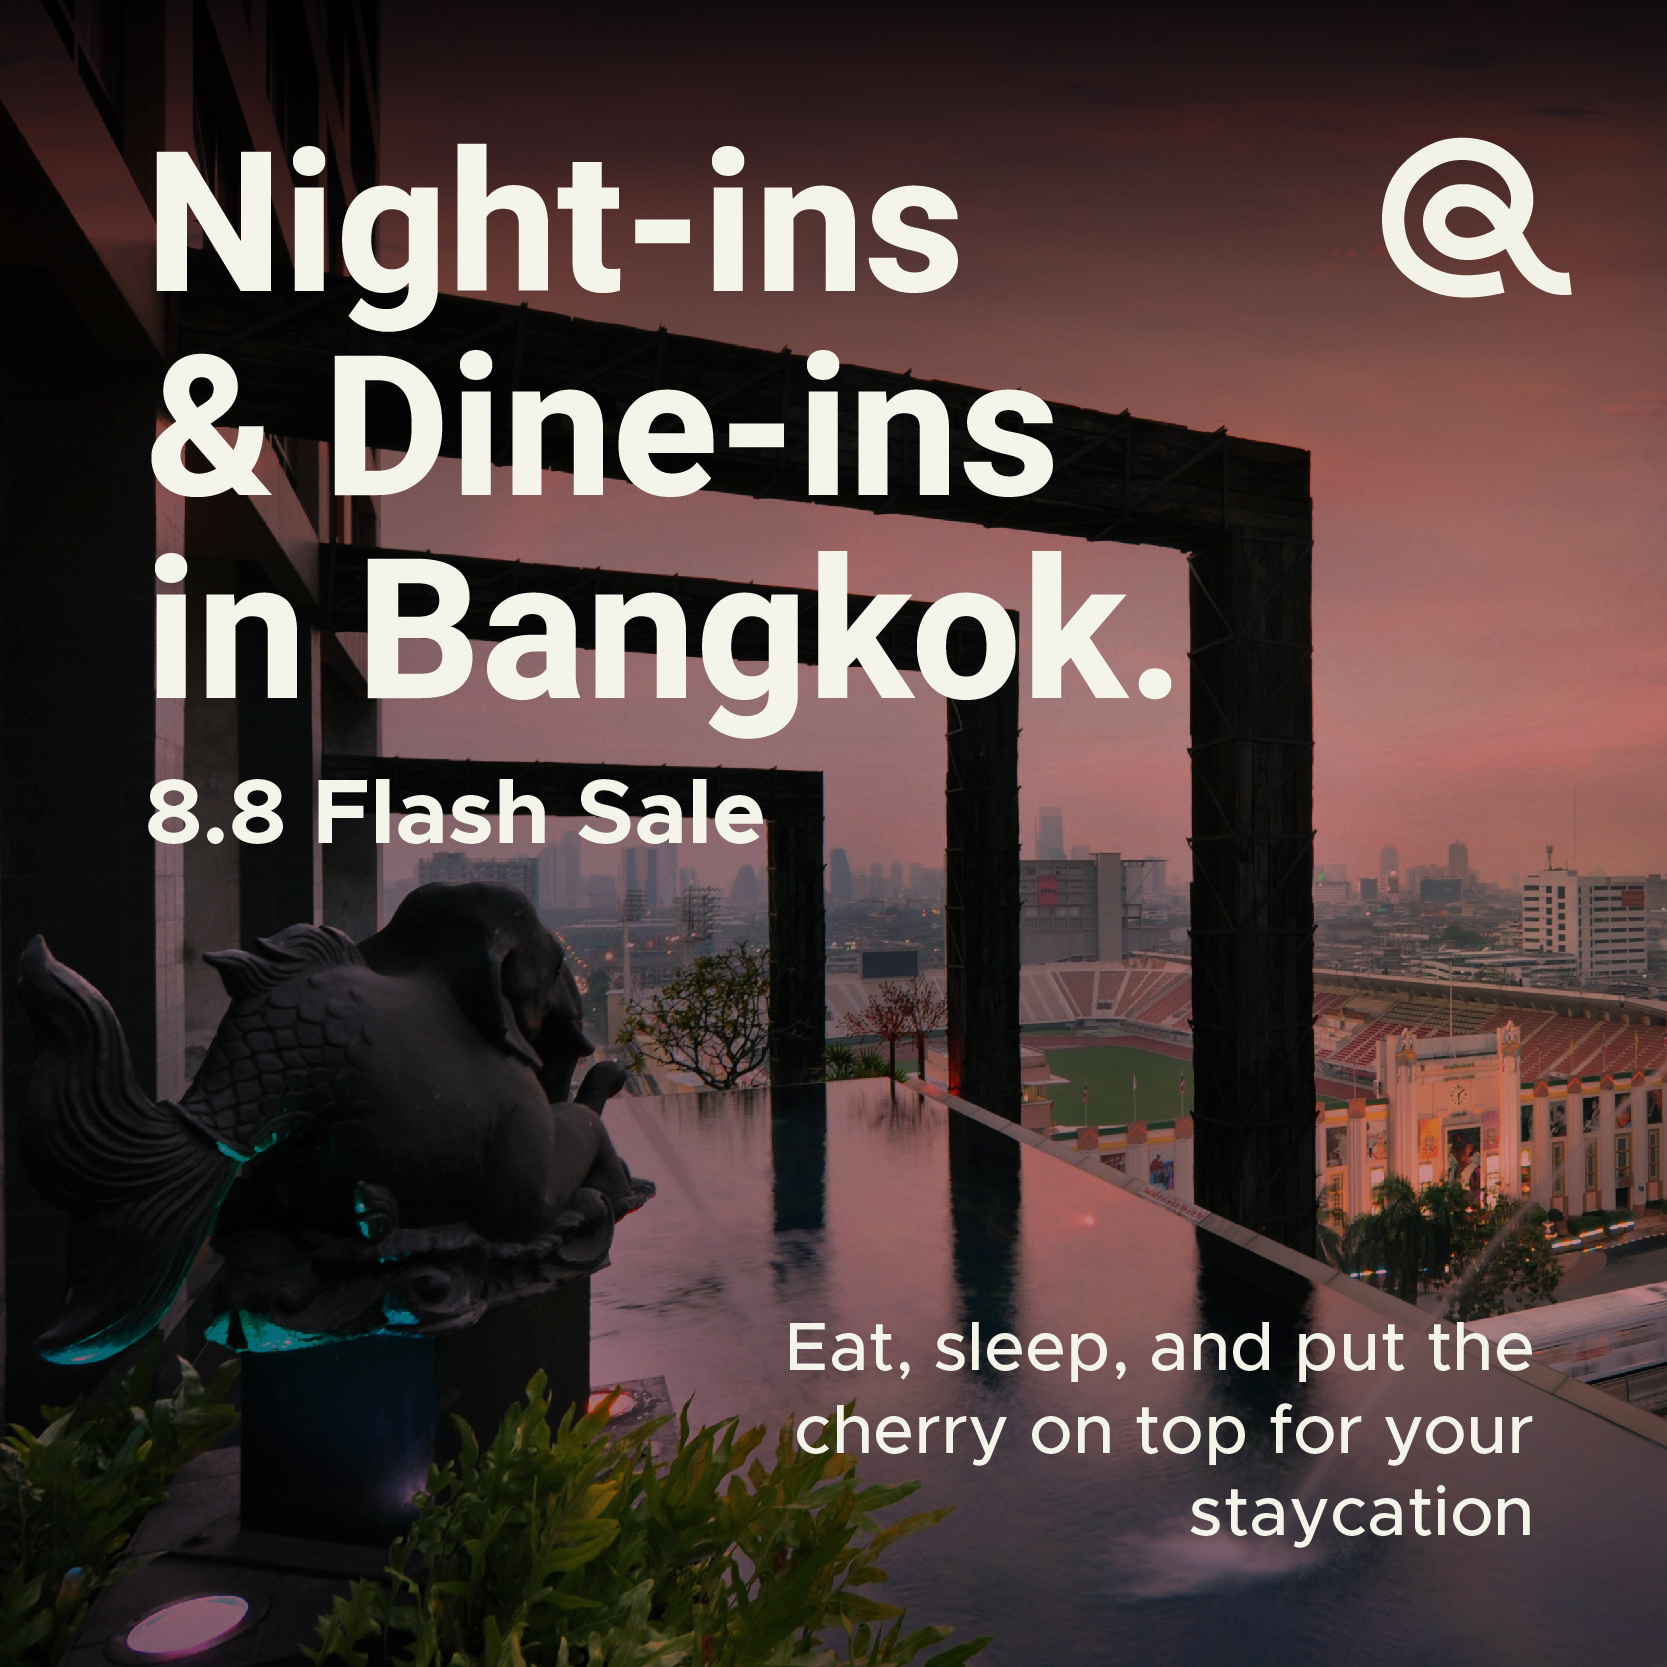 Night-ins & Dine-ins in Bangkok: 8.8 Flash Sale